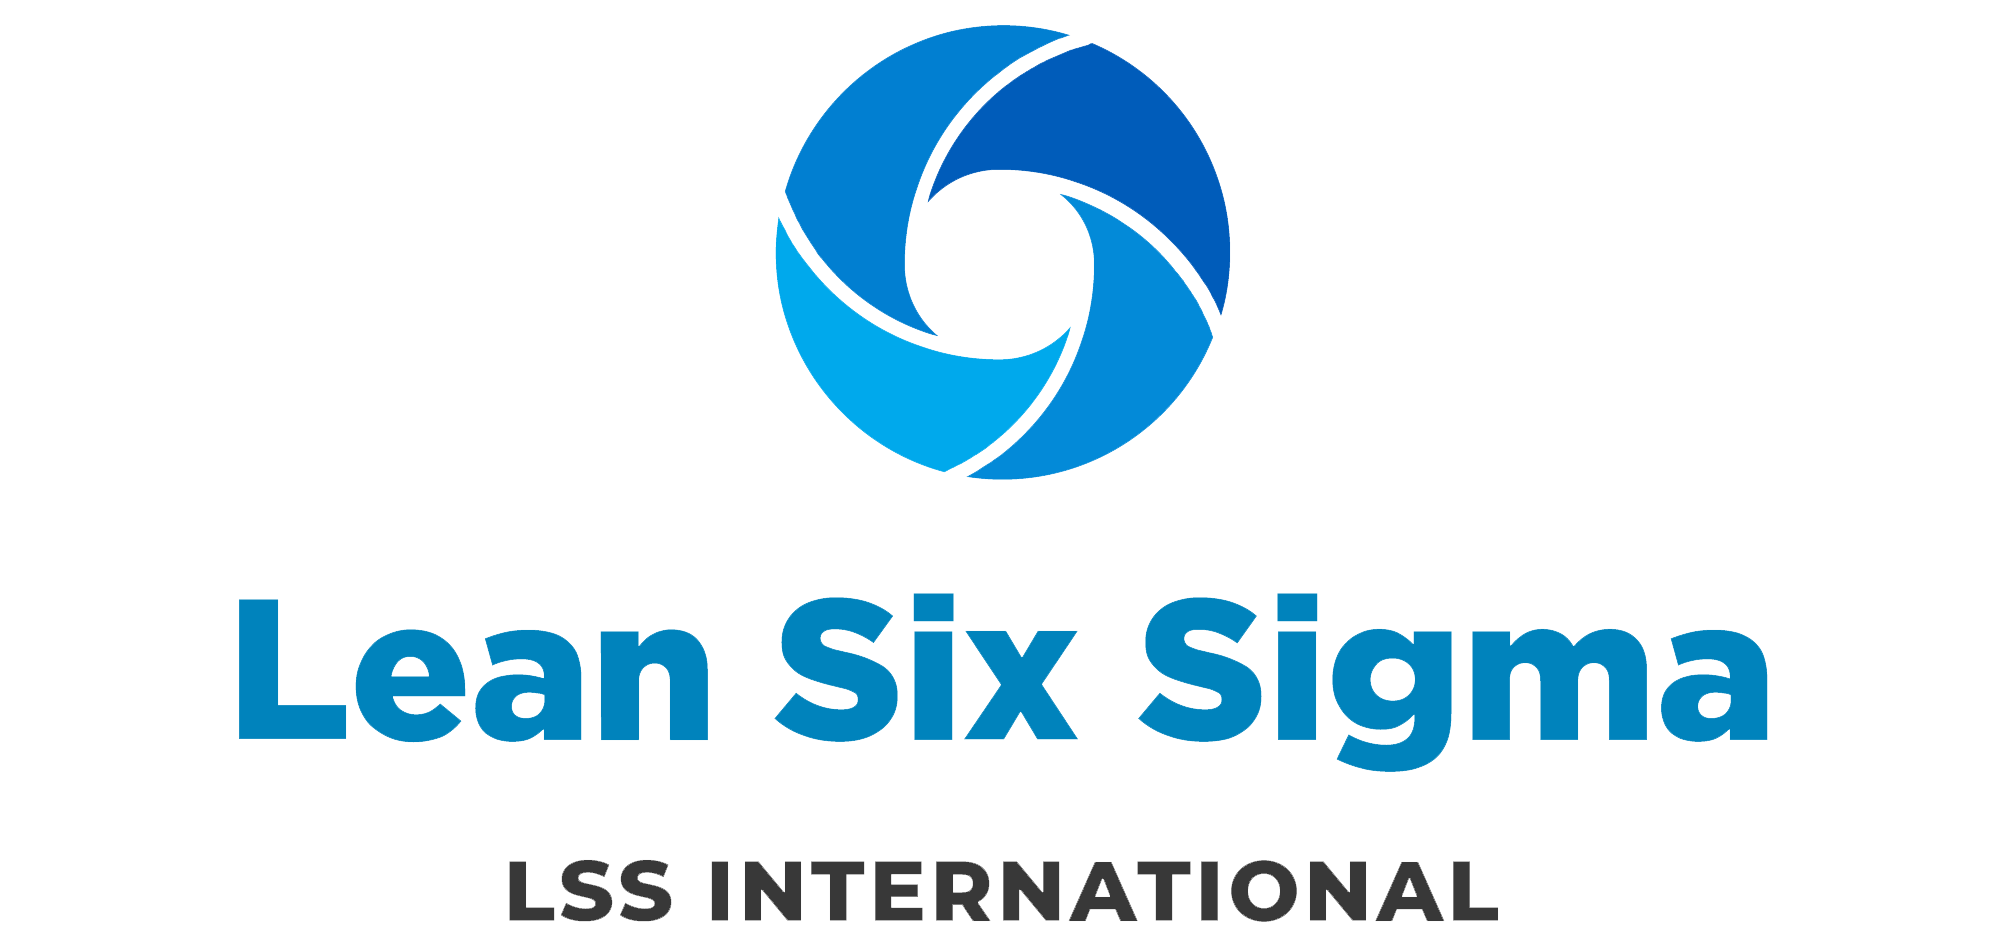 Lean Six Sigma International